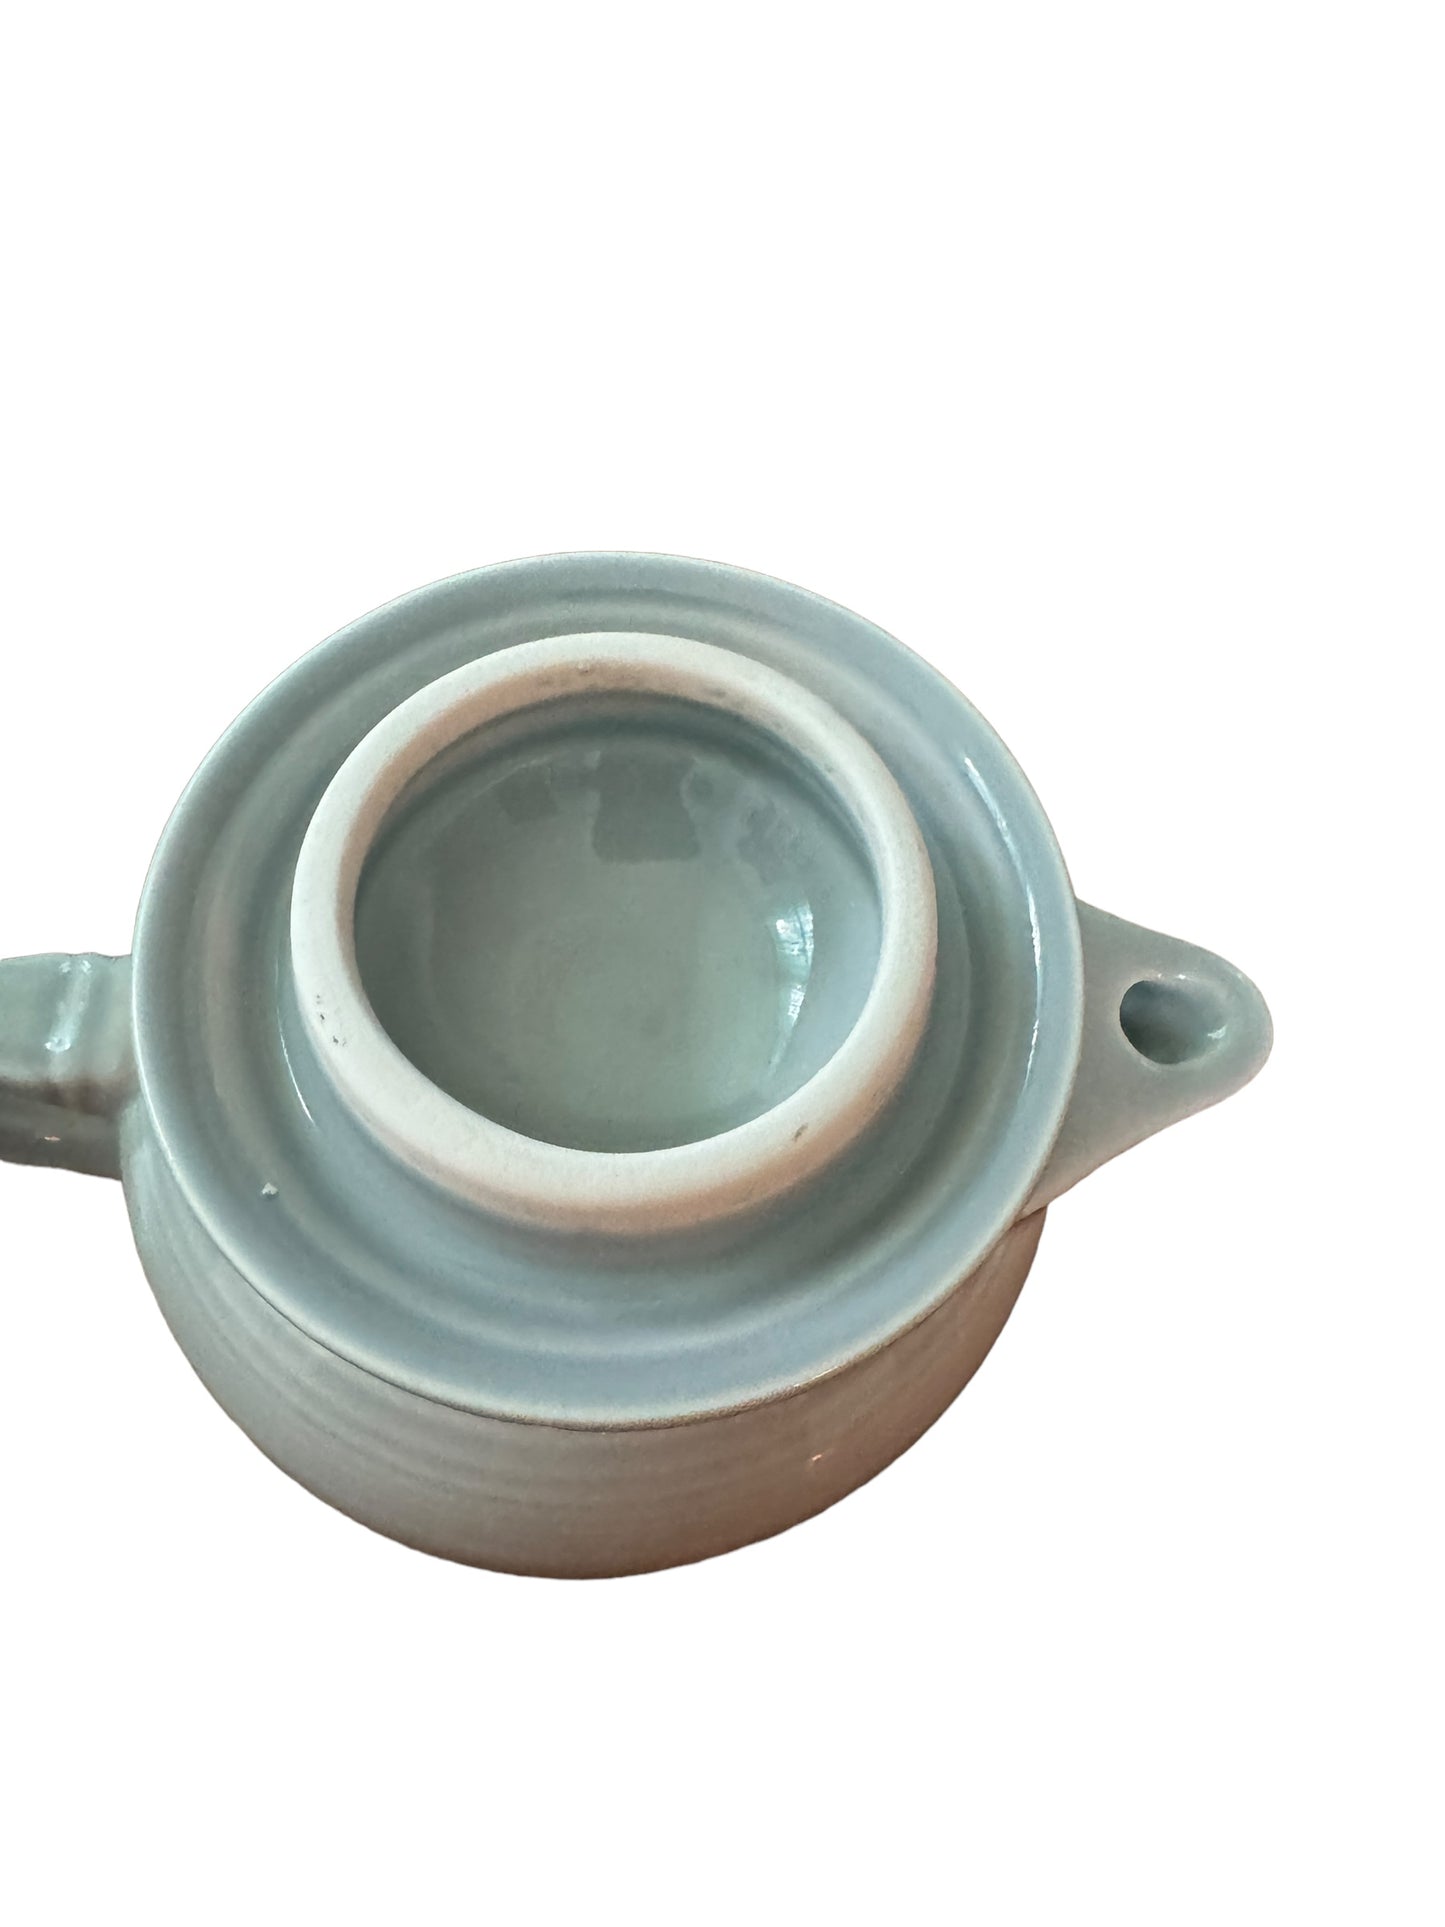 Fiesta 2 Cup Teapot in Pearl Grey